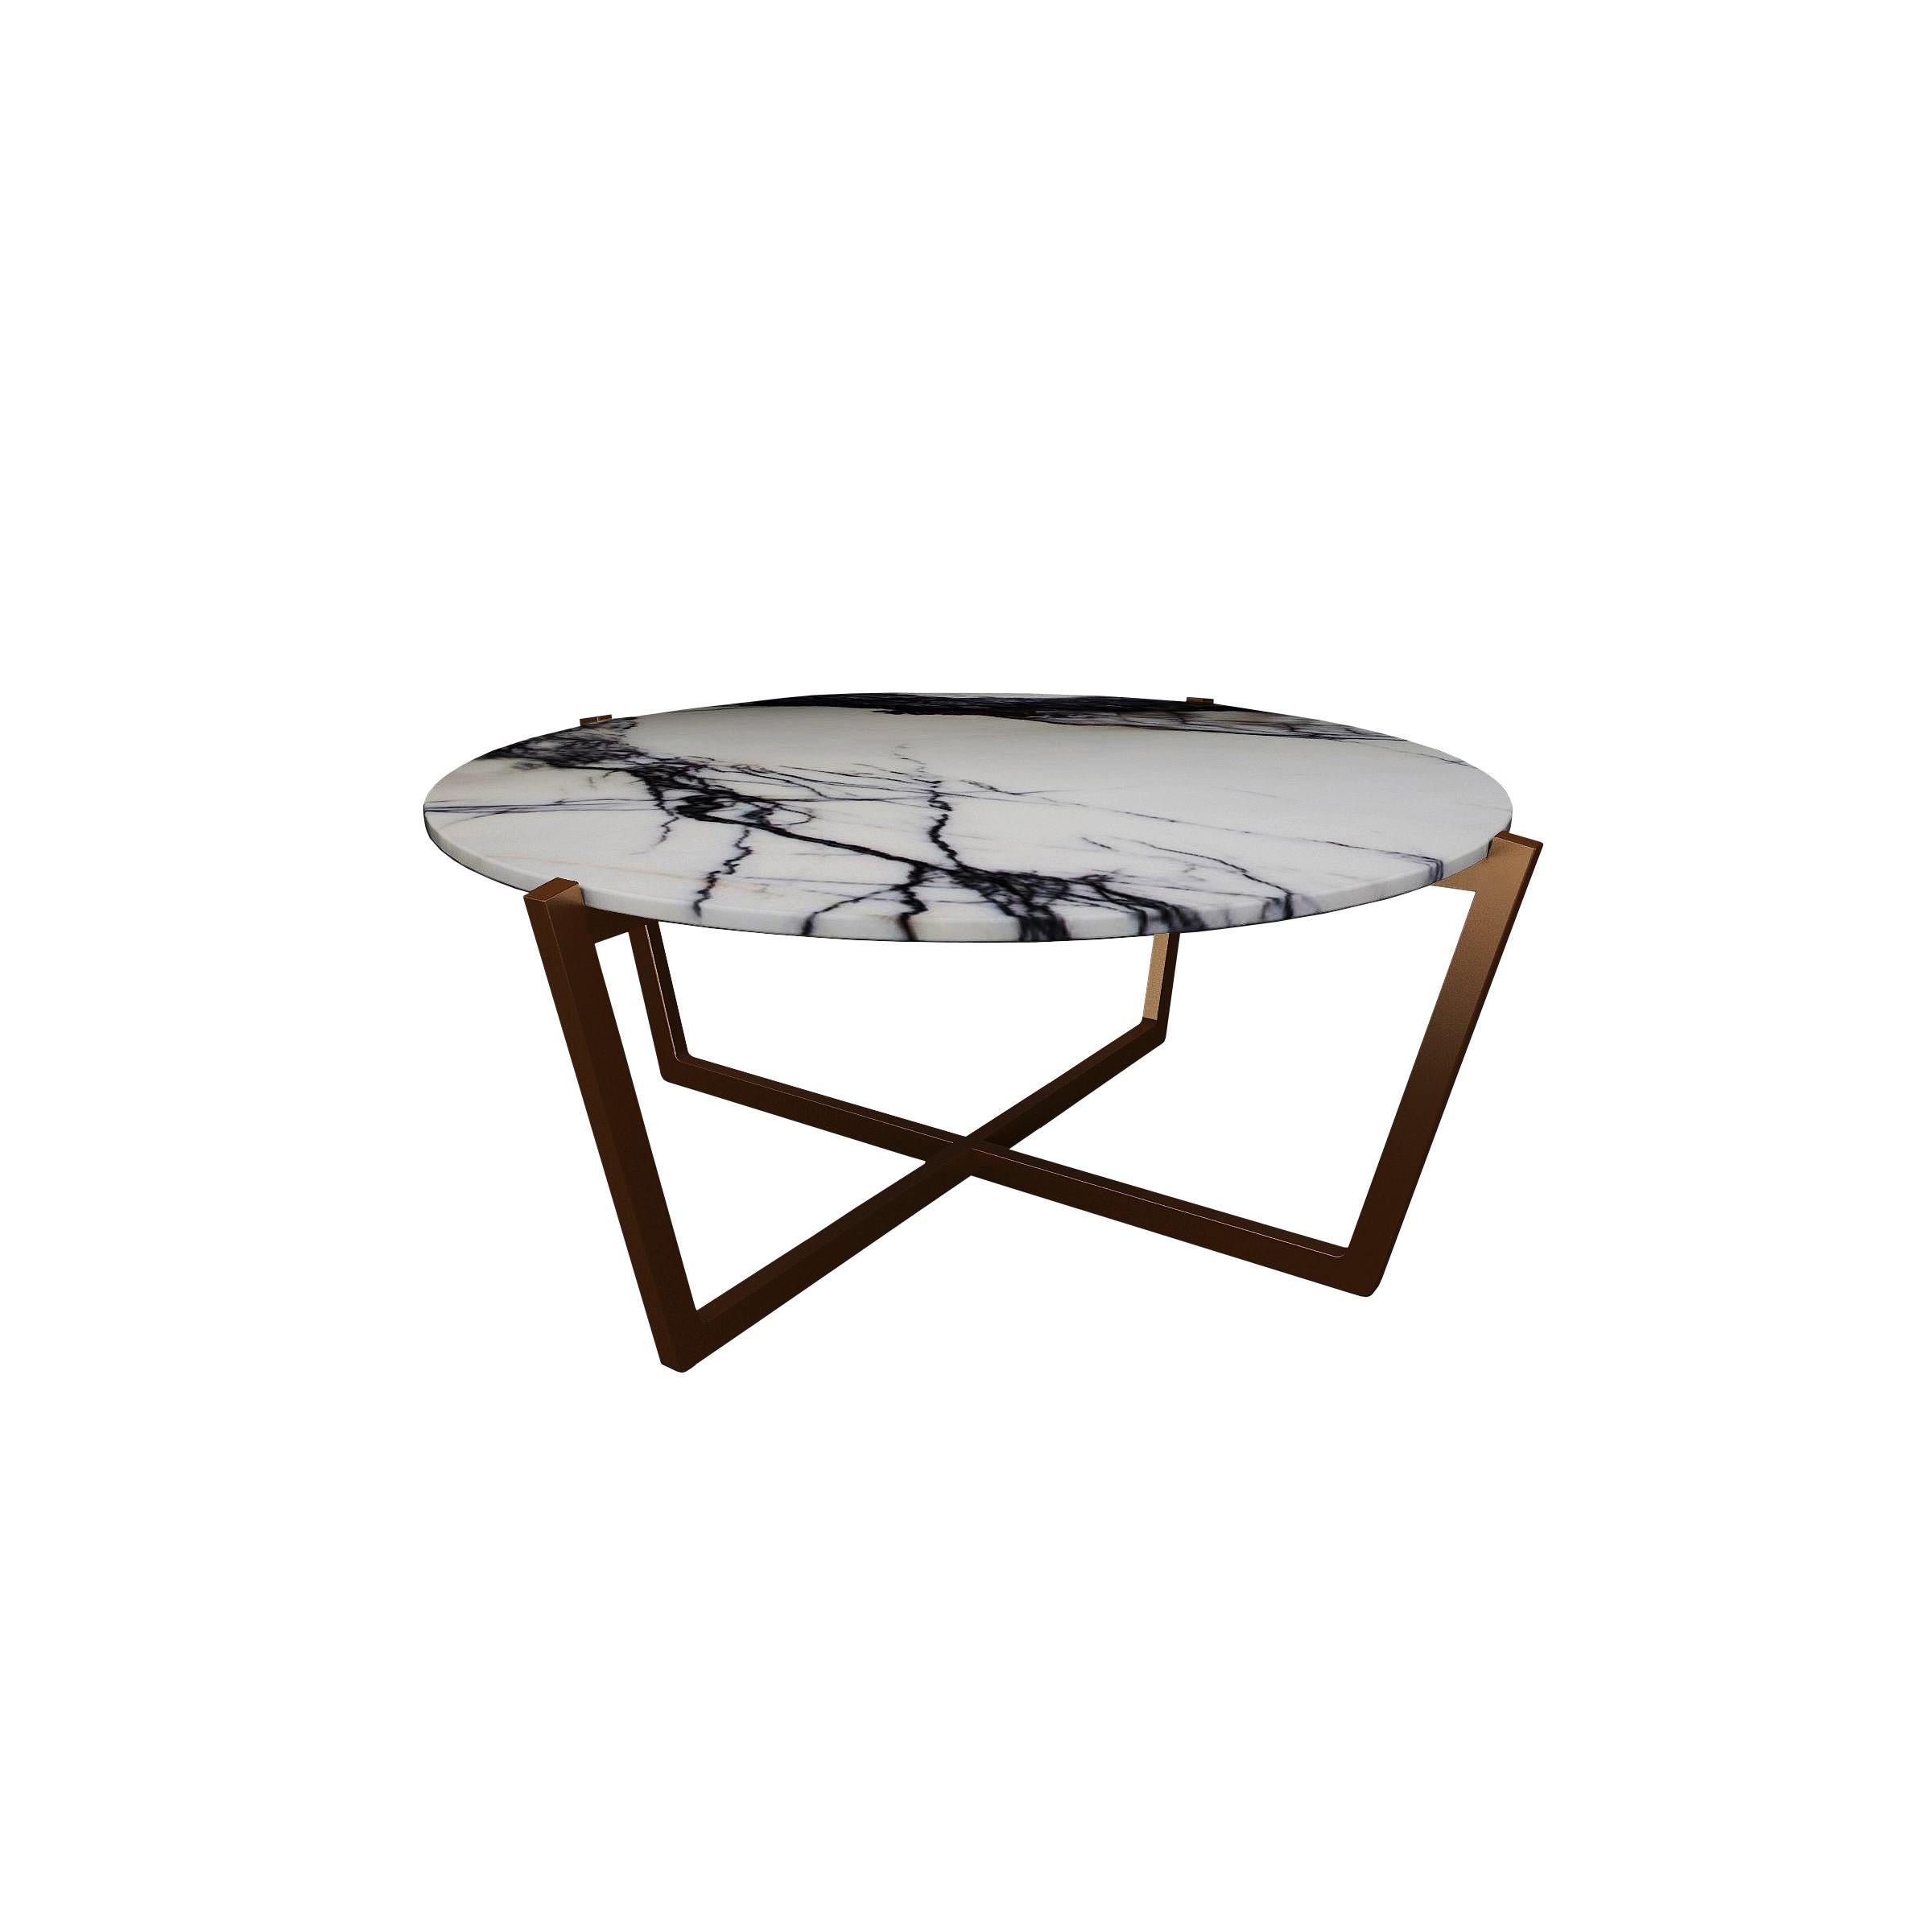 Scandinave moderne Table basse NORDST EMMA, marbre gris Rain italien, design moderne danois, nouveau en vente